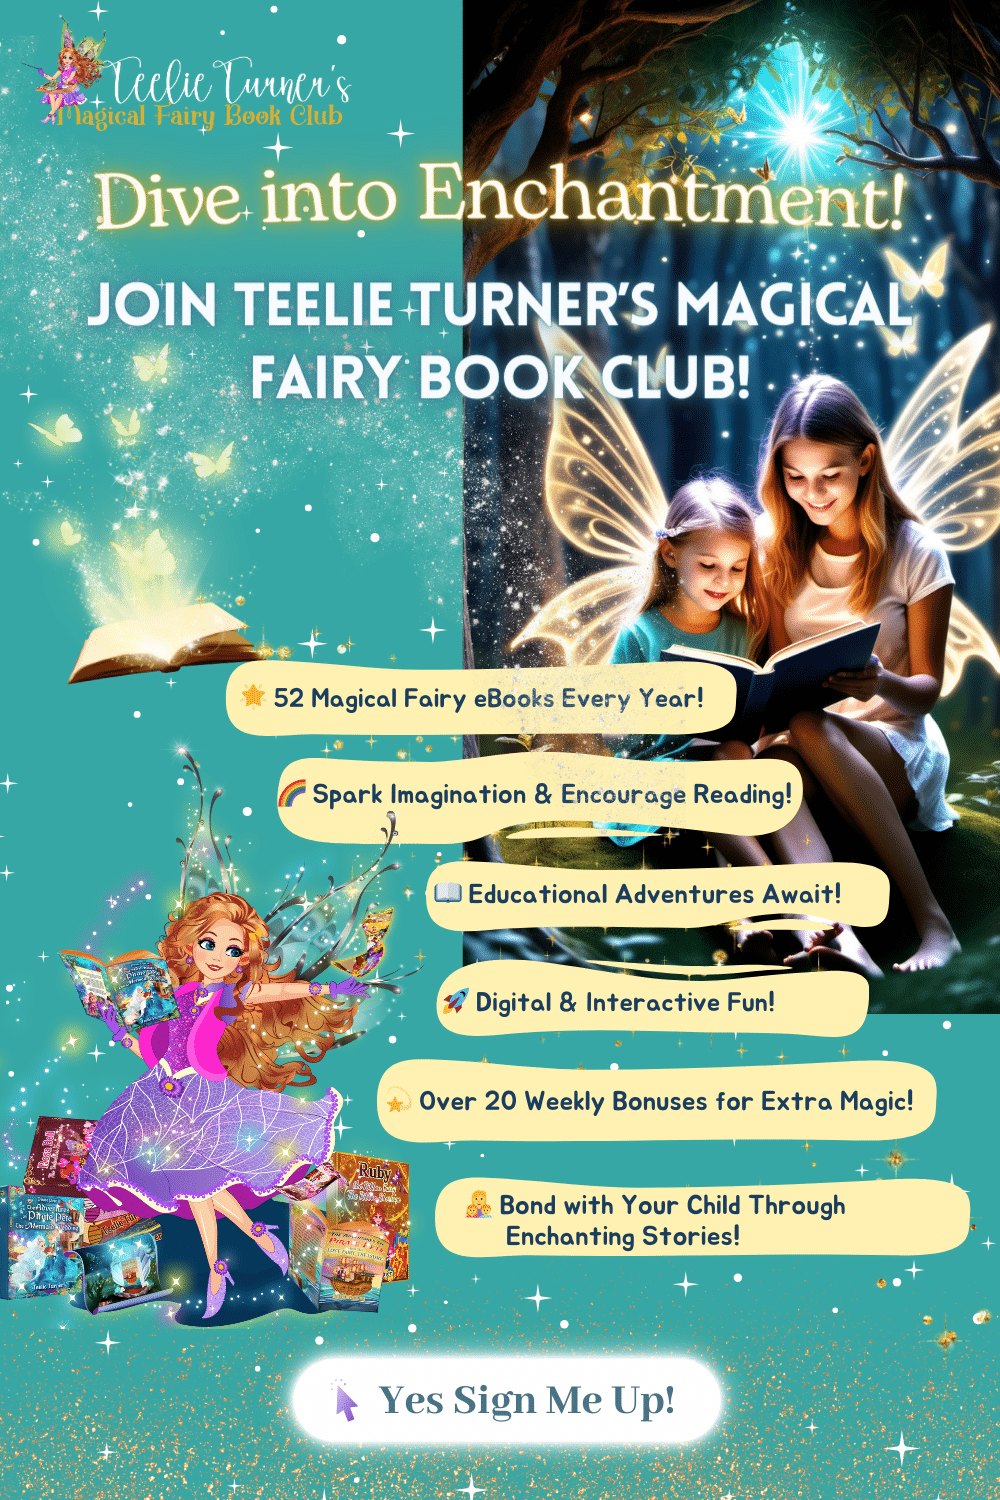 teelie turner’s magical fairy book club (pinterest pin)